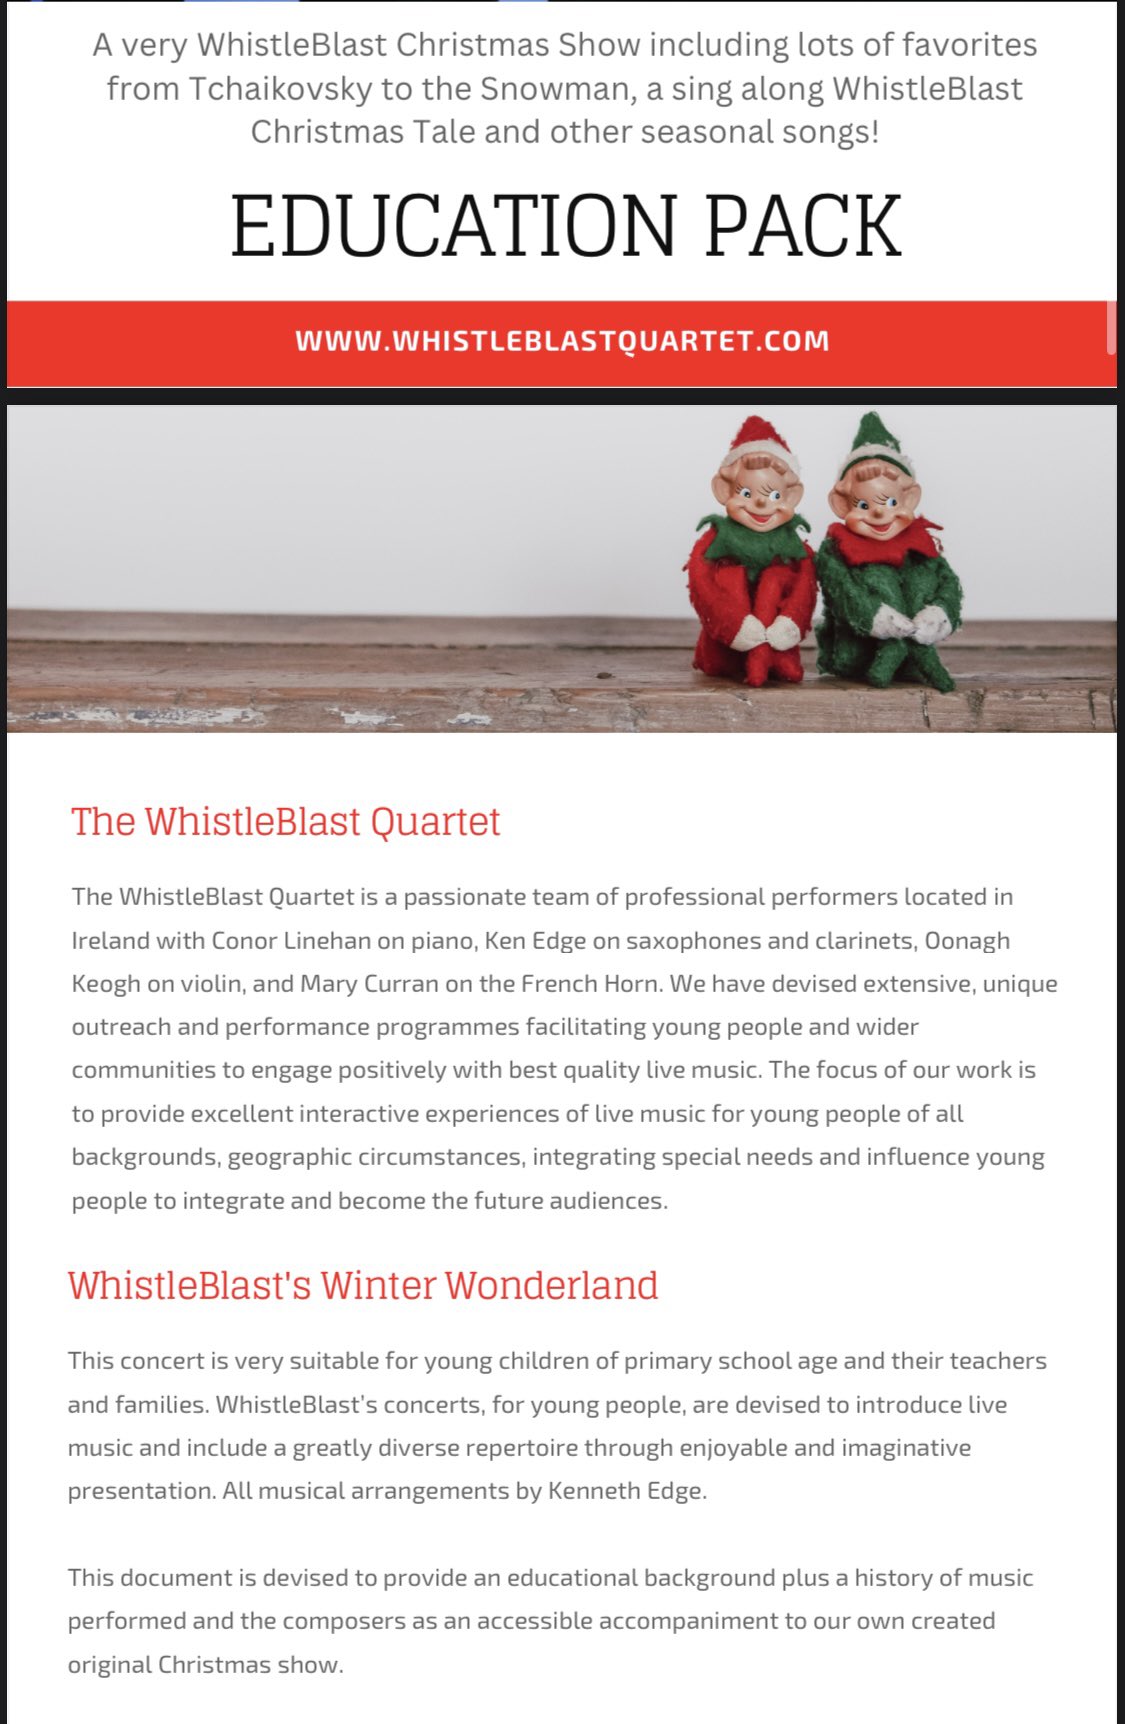 WhistleBlast Quartet (@WhistleBlast4) / Twitter